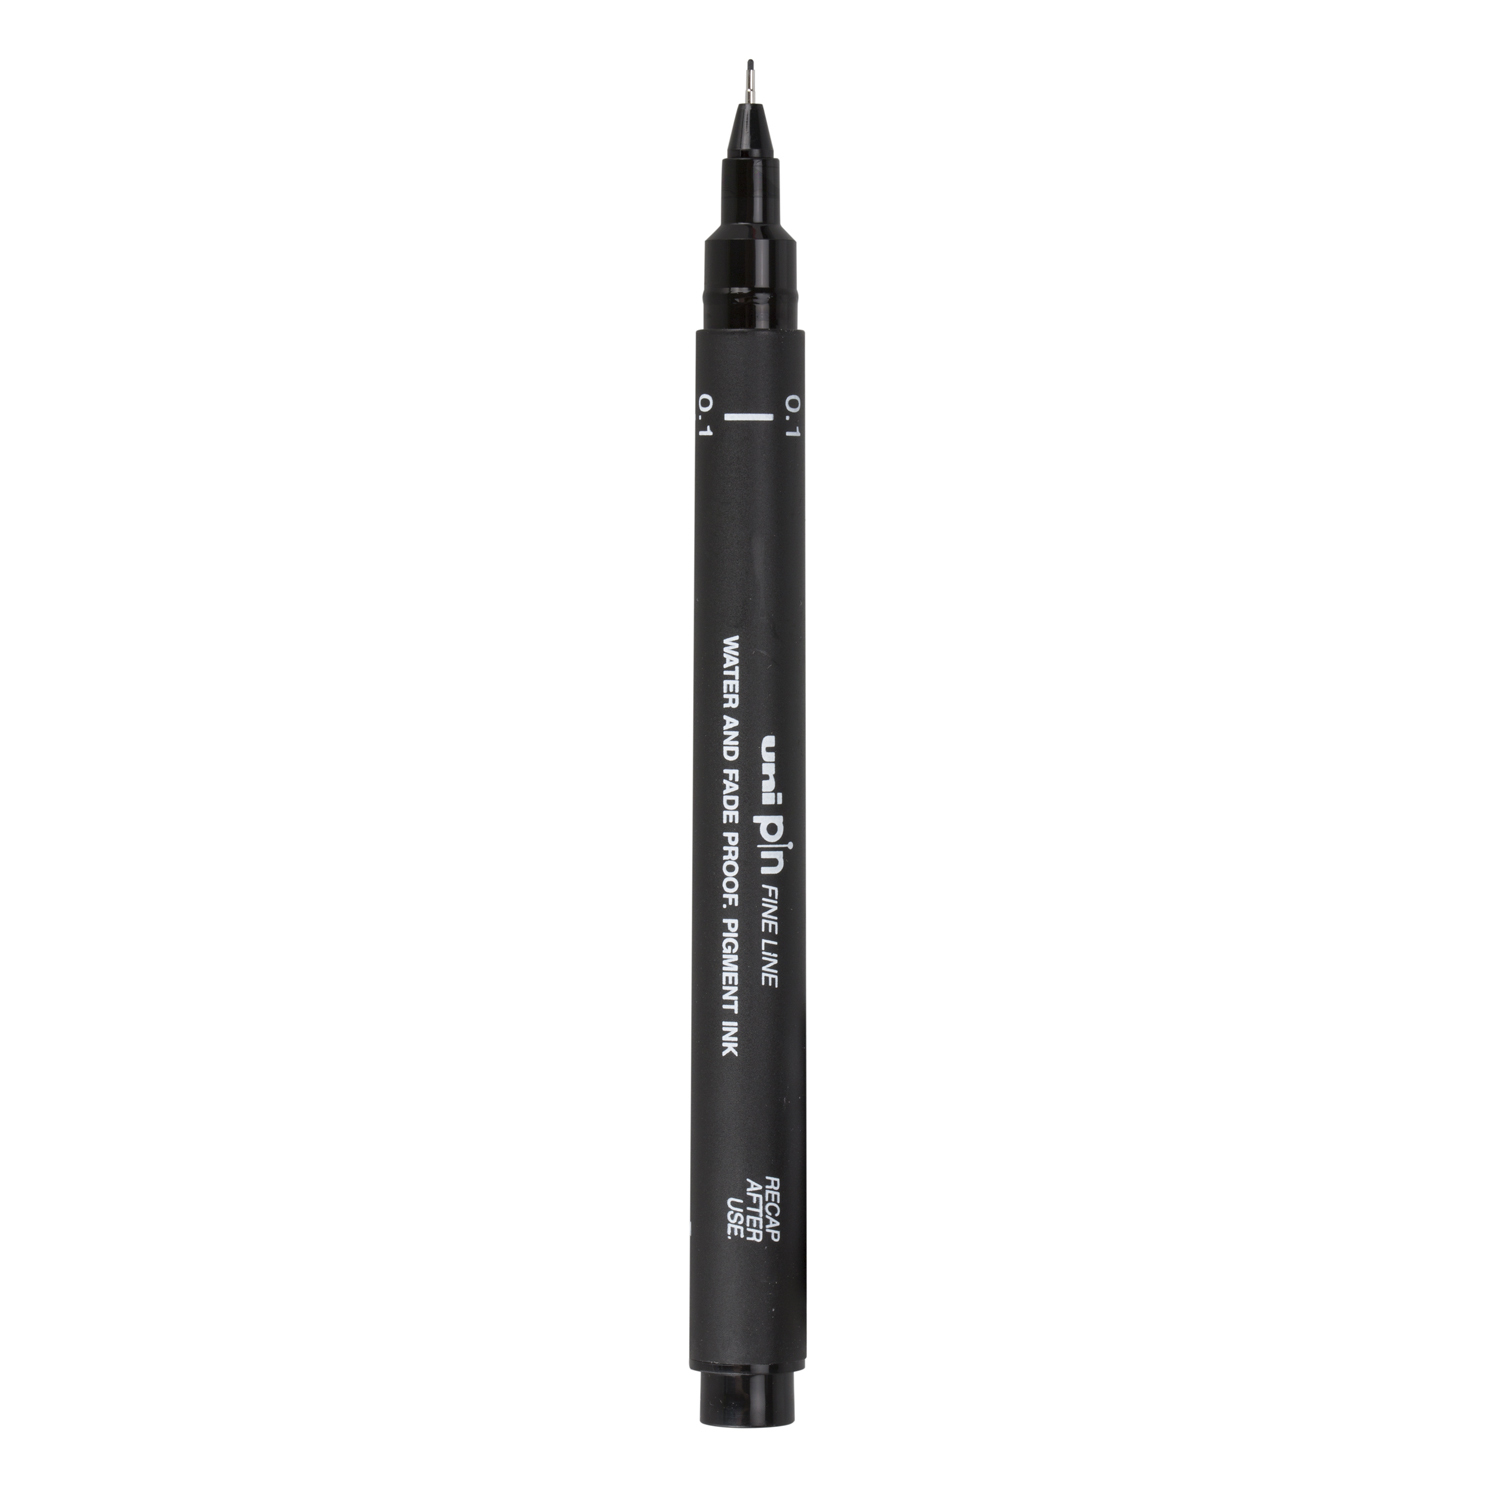 Uniball Pin Fine Liner Drawing Pen - Black / 0.1mm Image 2